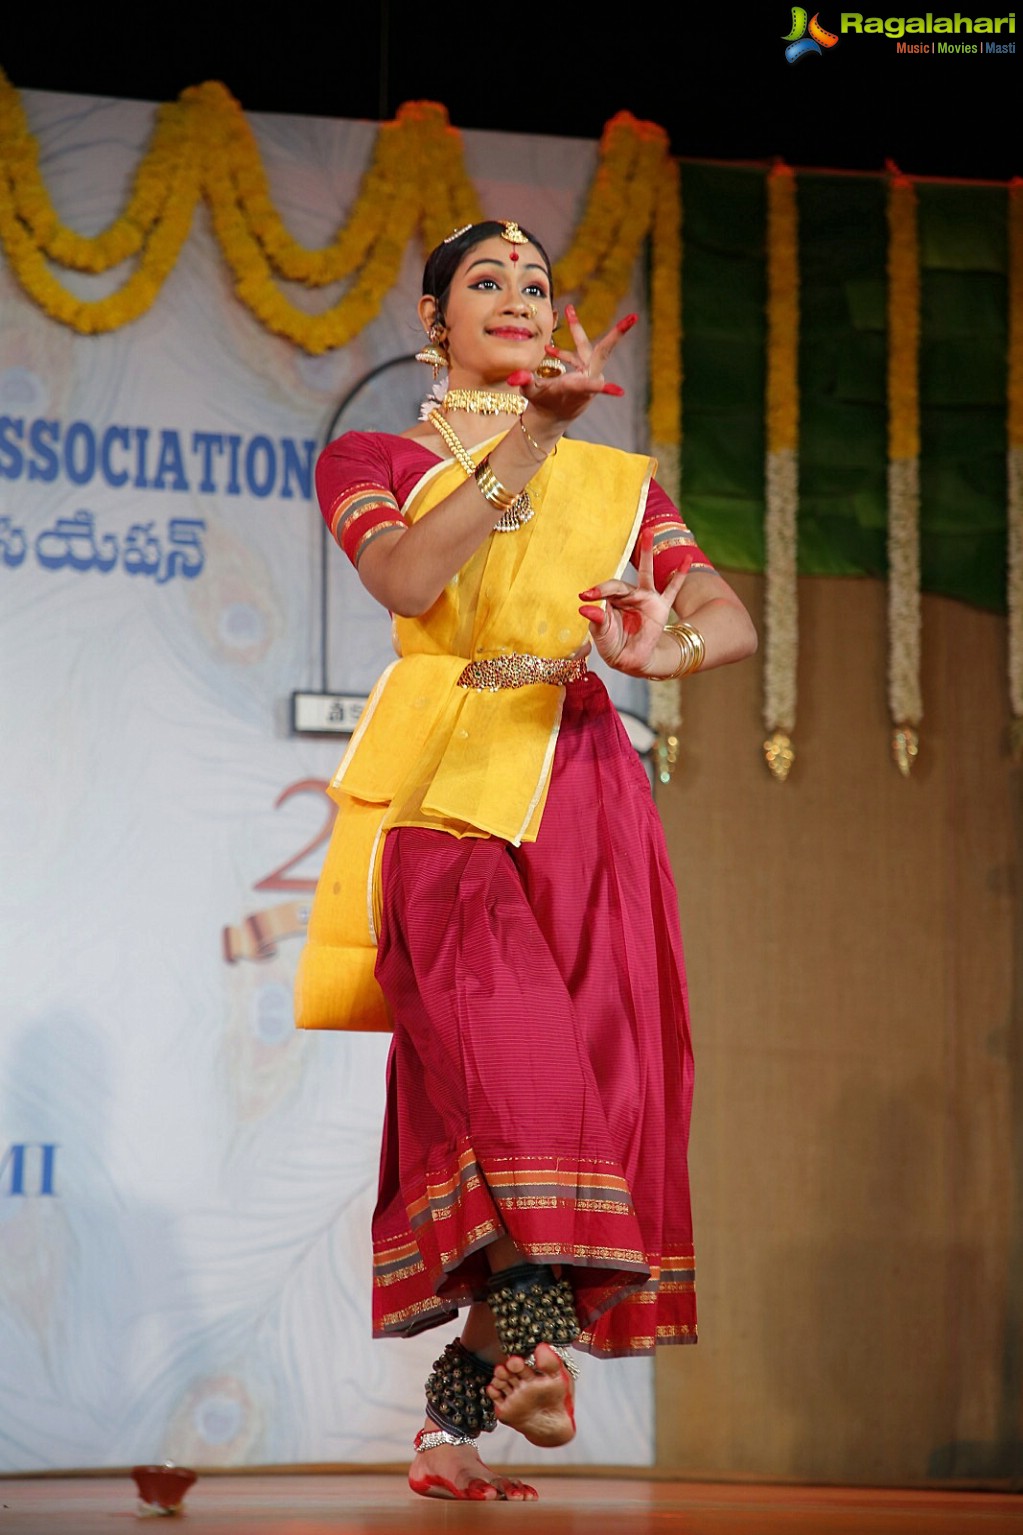 Sri Kala Sudha Telugu Association 20th Anniversary Celebrations at Music Academy, Chennai